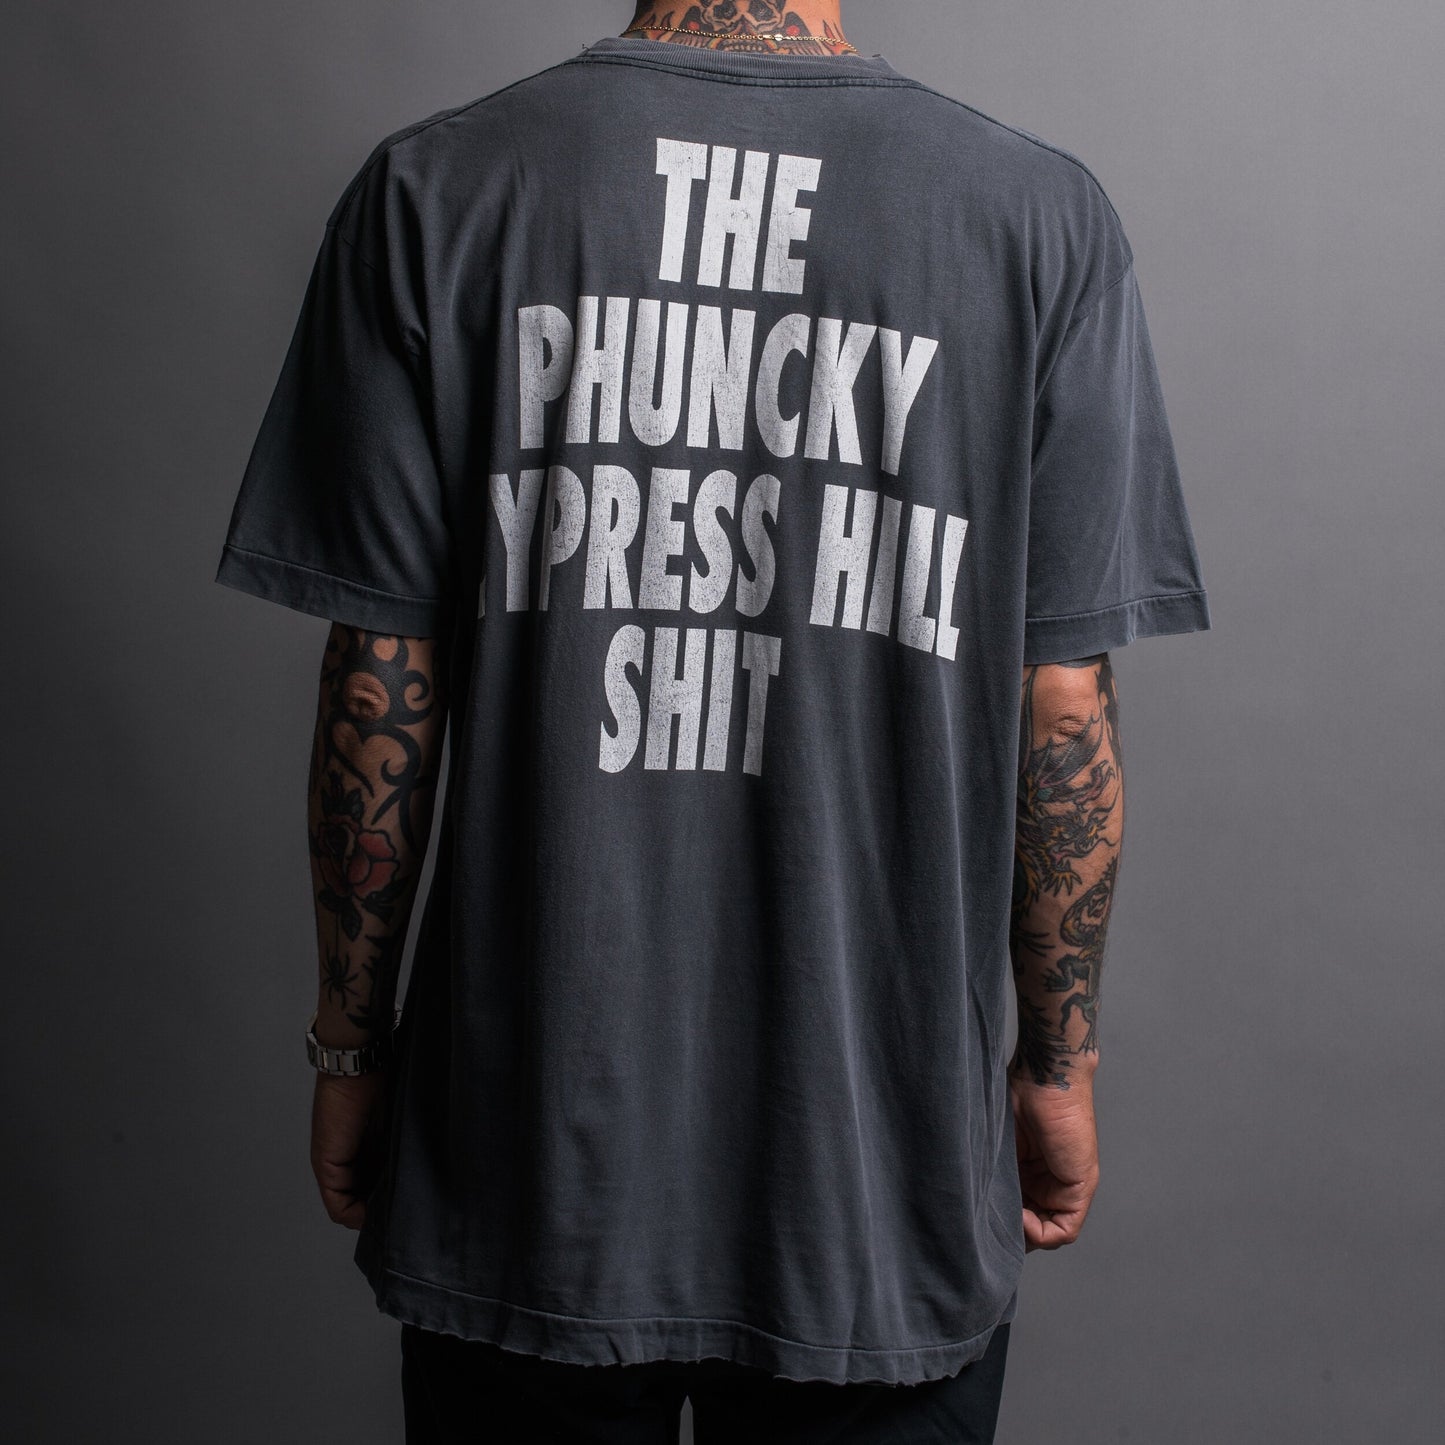 Vintage 90’s Cypress Hill The Phuncky Cypress Hill Shit T-Shirt